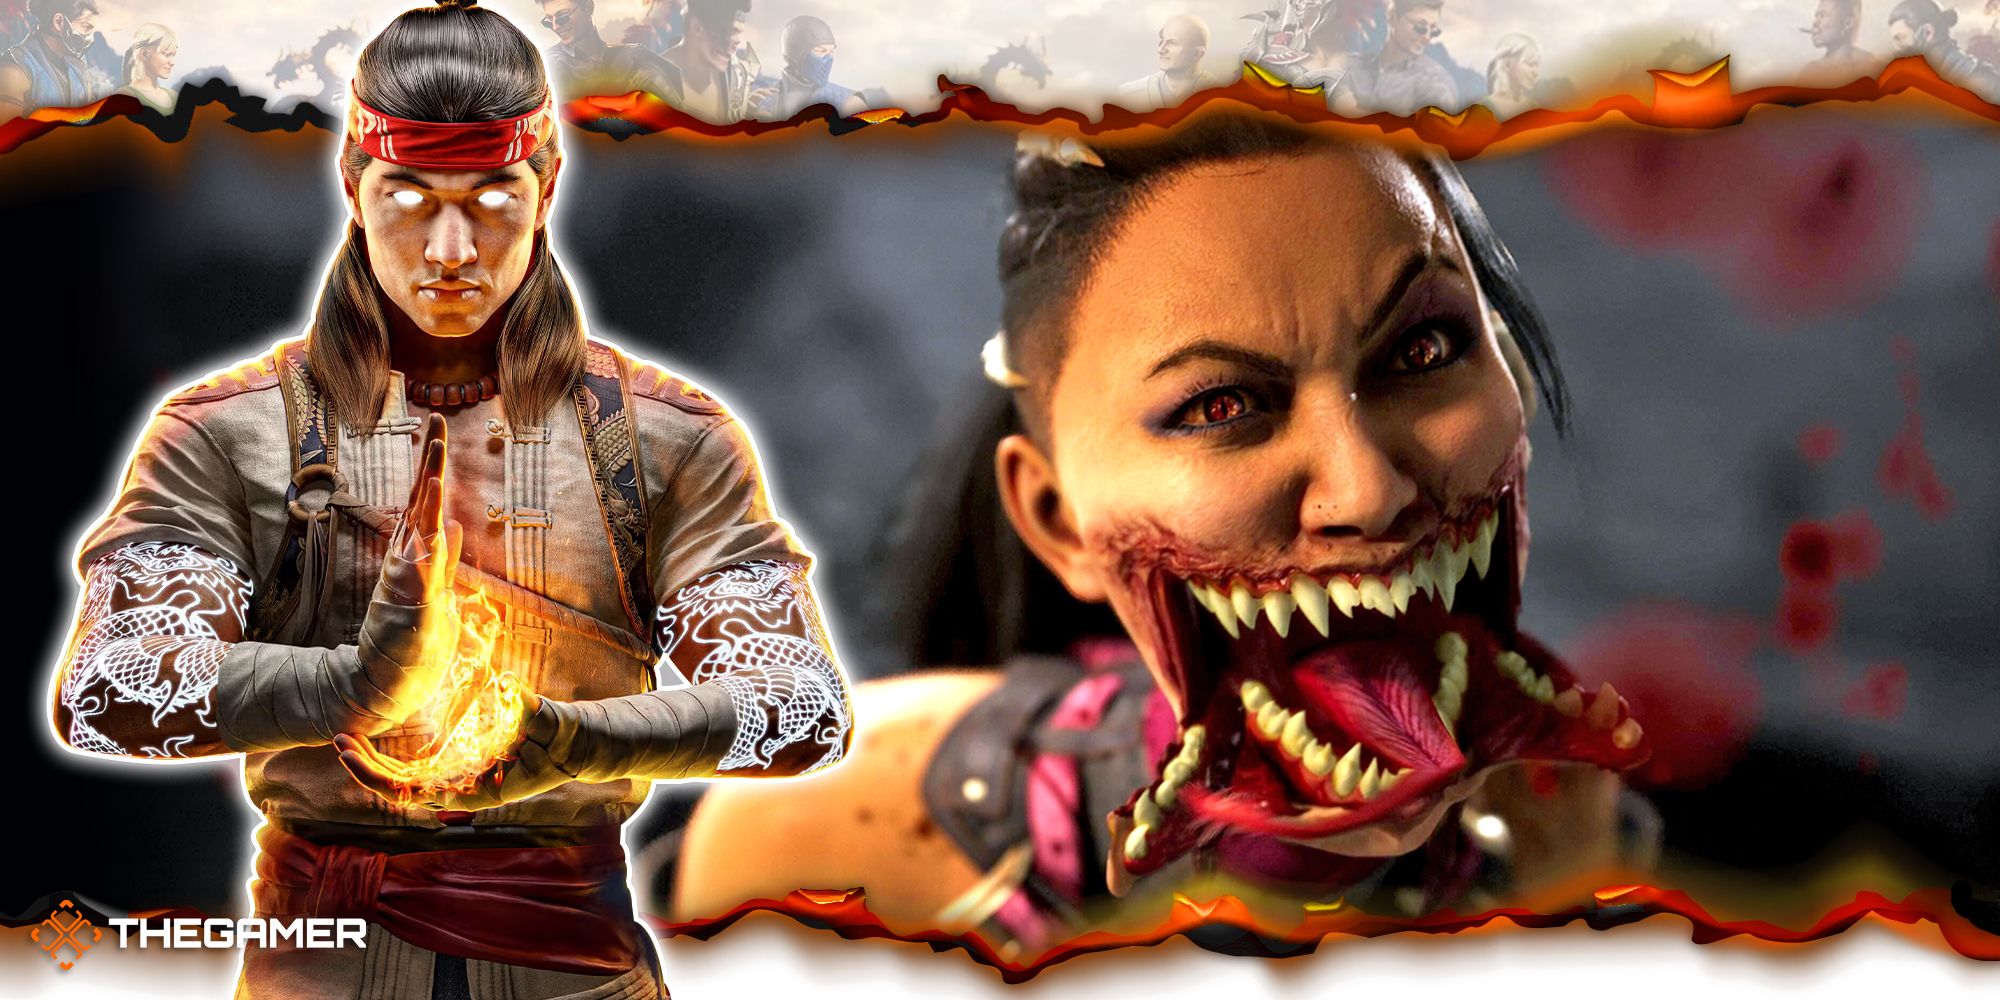 Mortal Kombat 1: Mileena Guide — Moves, Combos, & More Tips